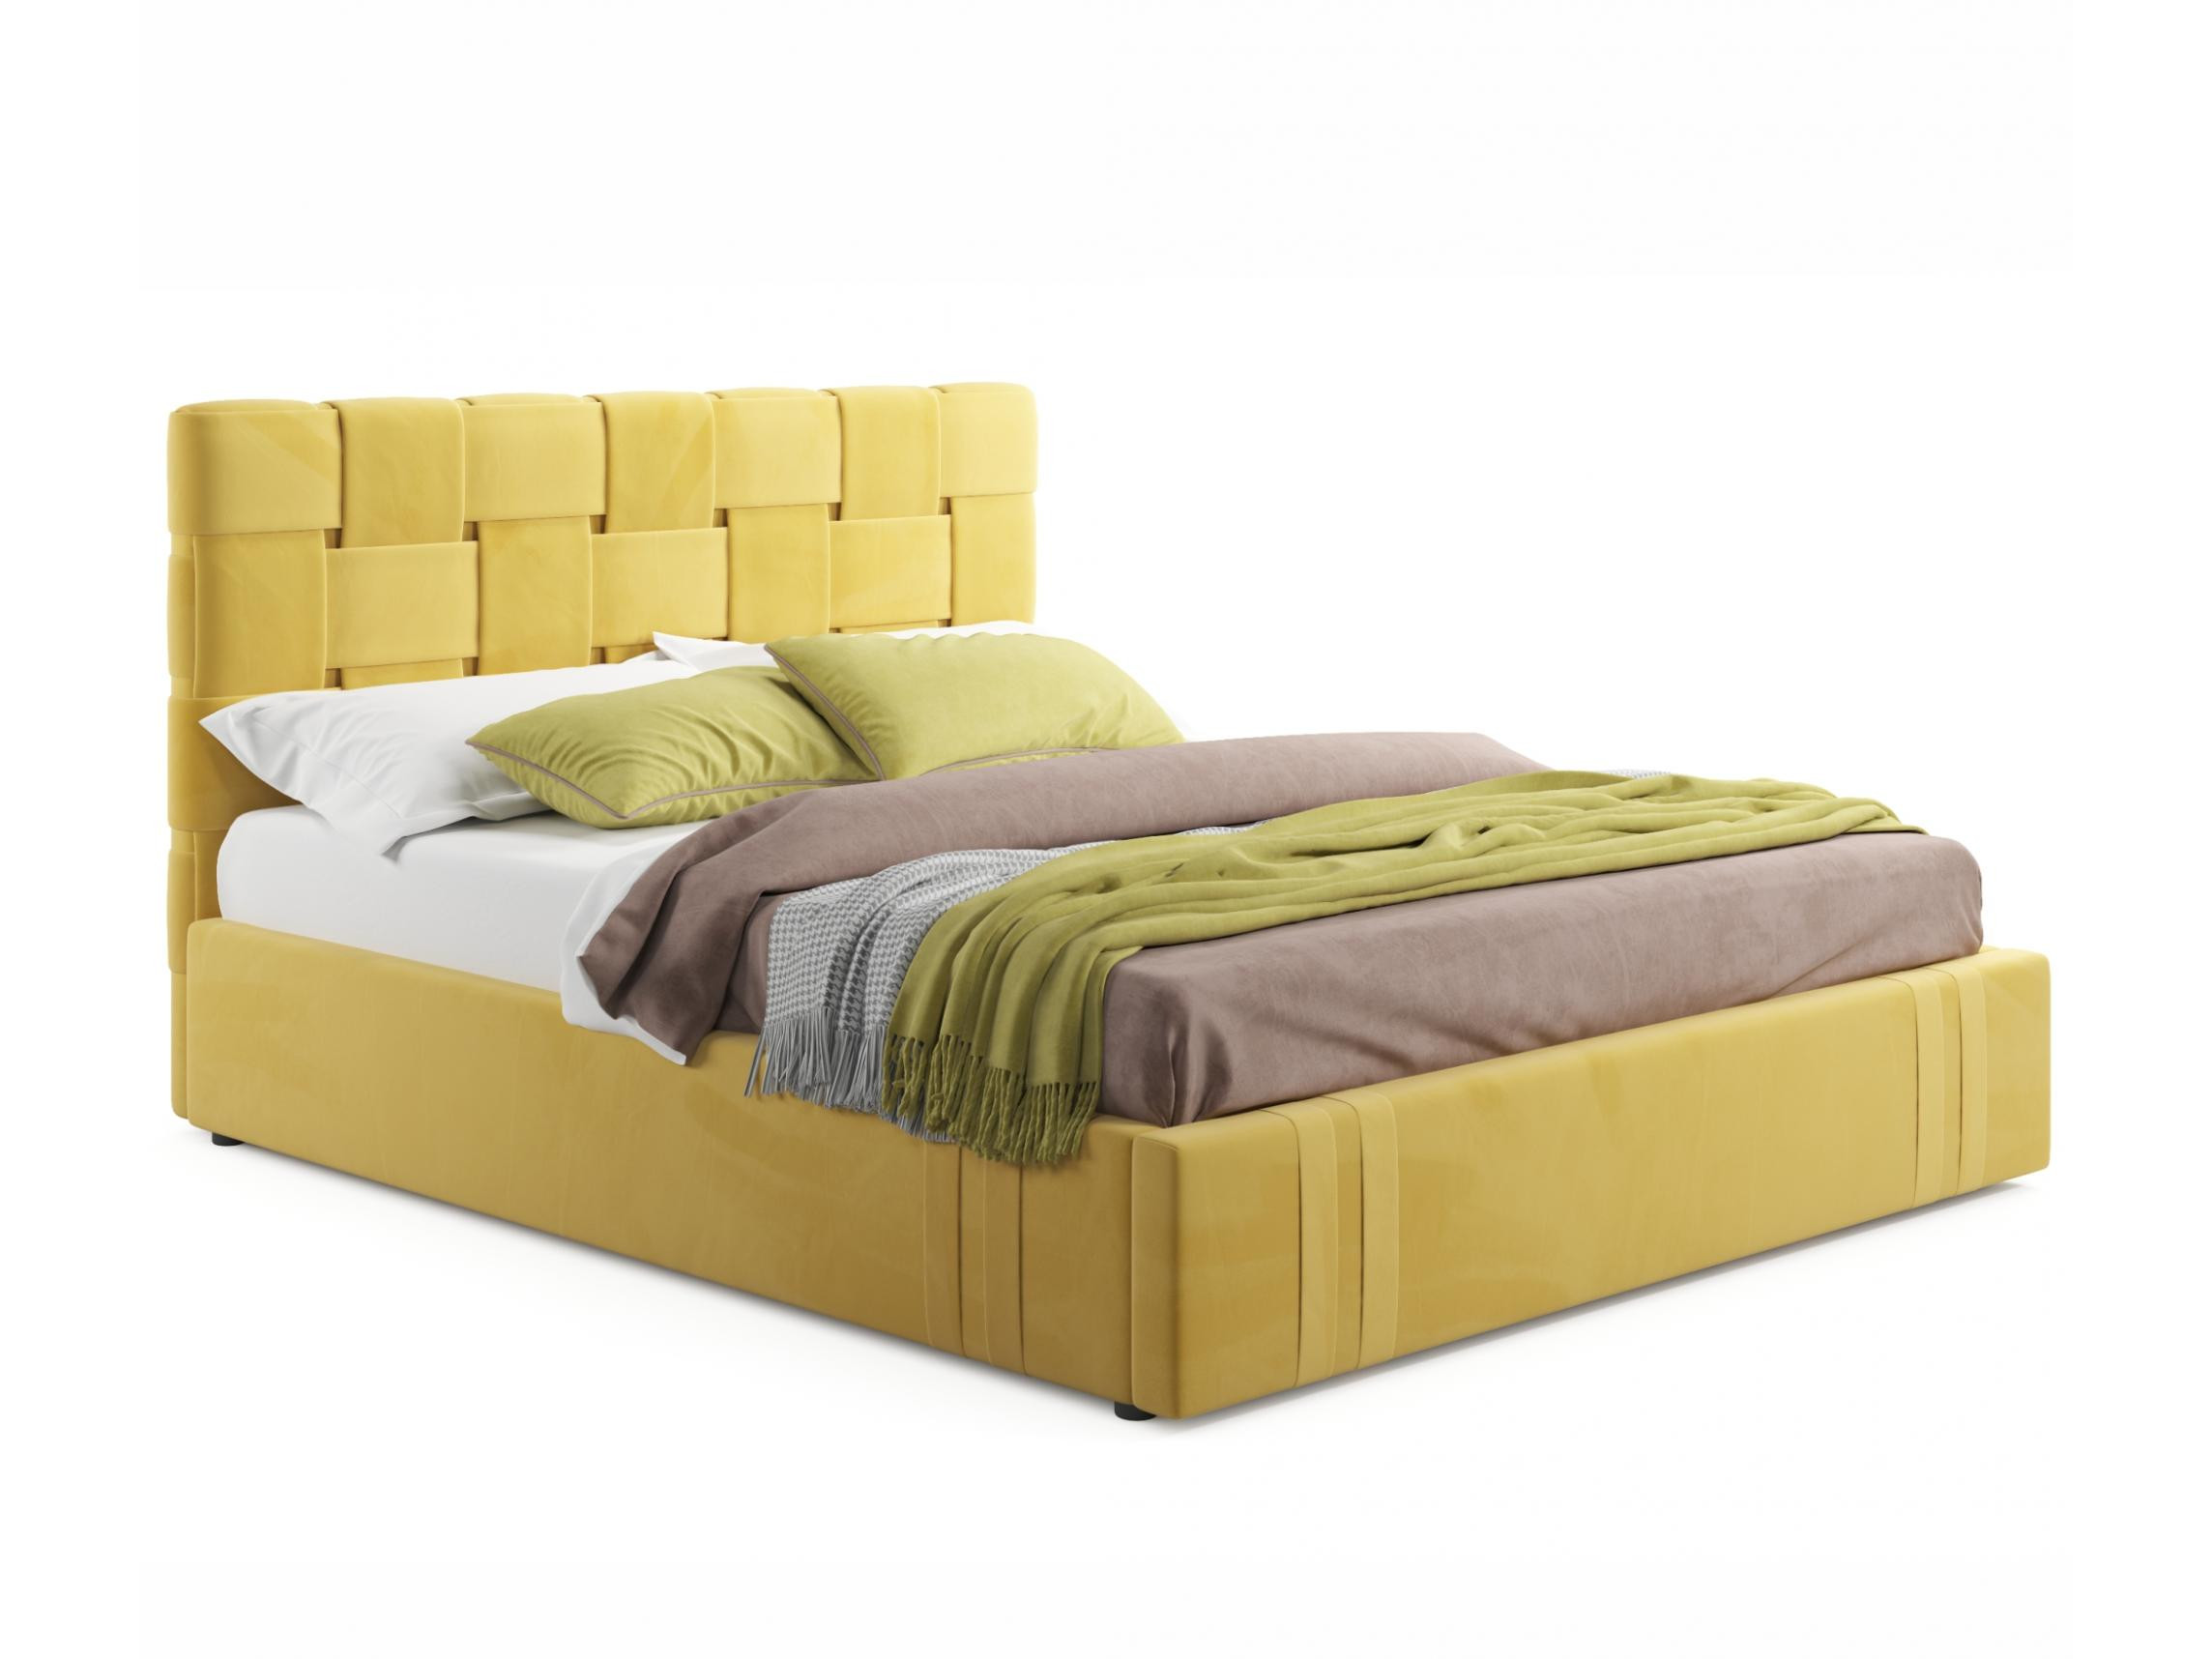 Комплект для сна Tiffany 1600 желтый с подъемным механизмом желтый, Желтый, Велюр, ДСП комплект для сна селеста 1600 венге с подъемным